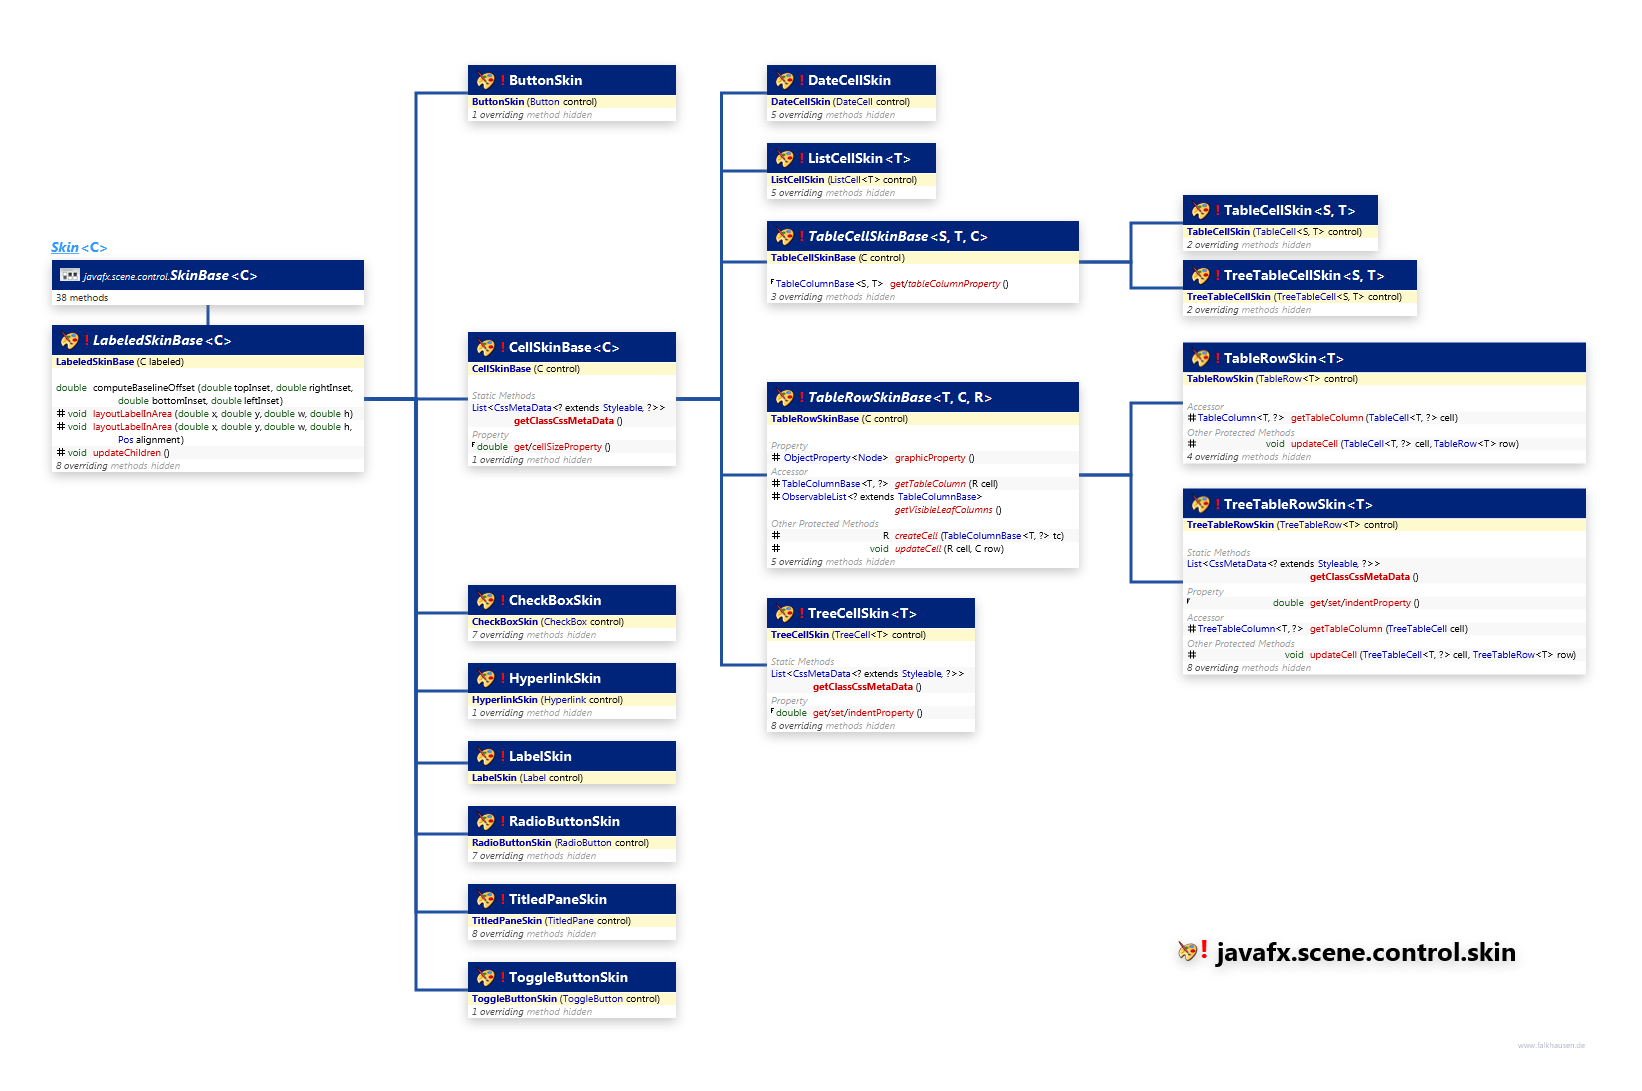 javafx.scene.control.skin LabeledSkinBase class diagram and api documentation for JavaFX 10